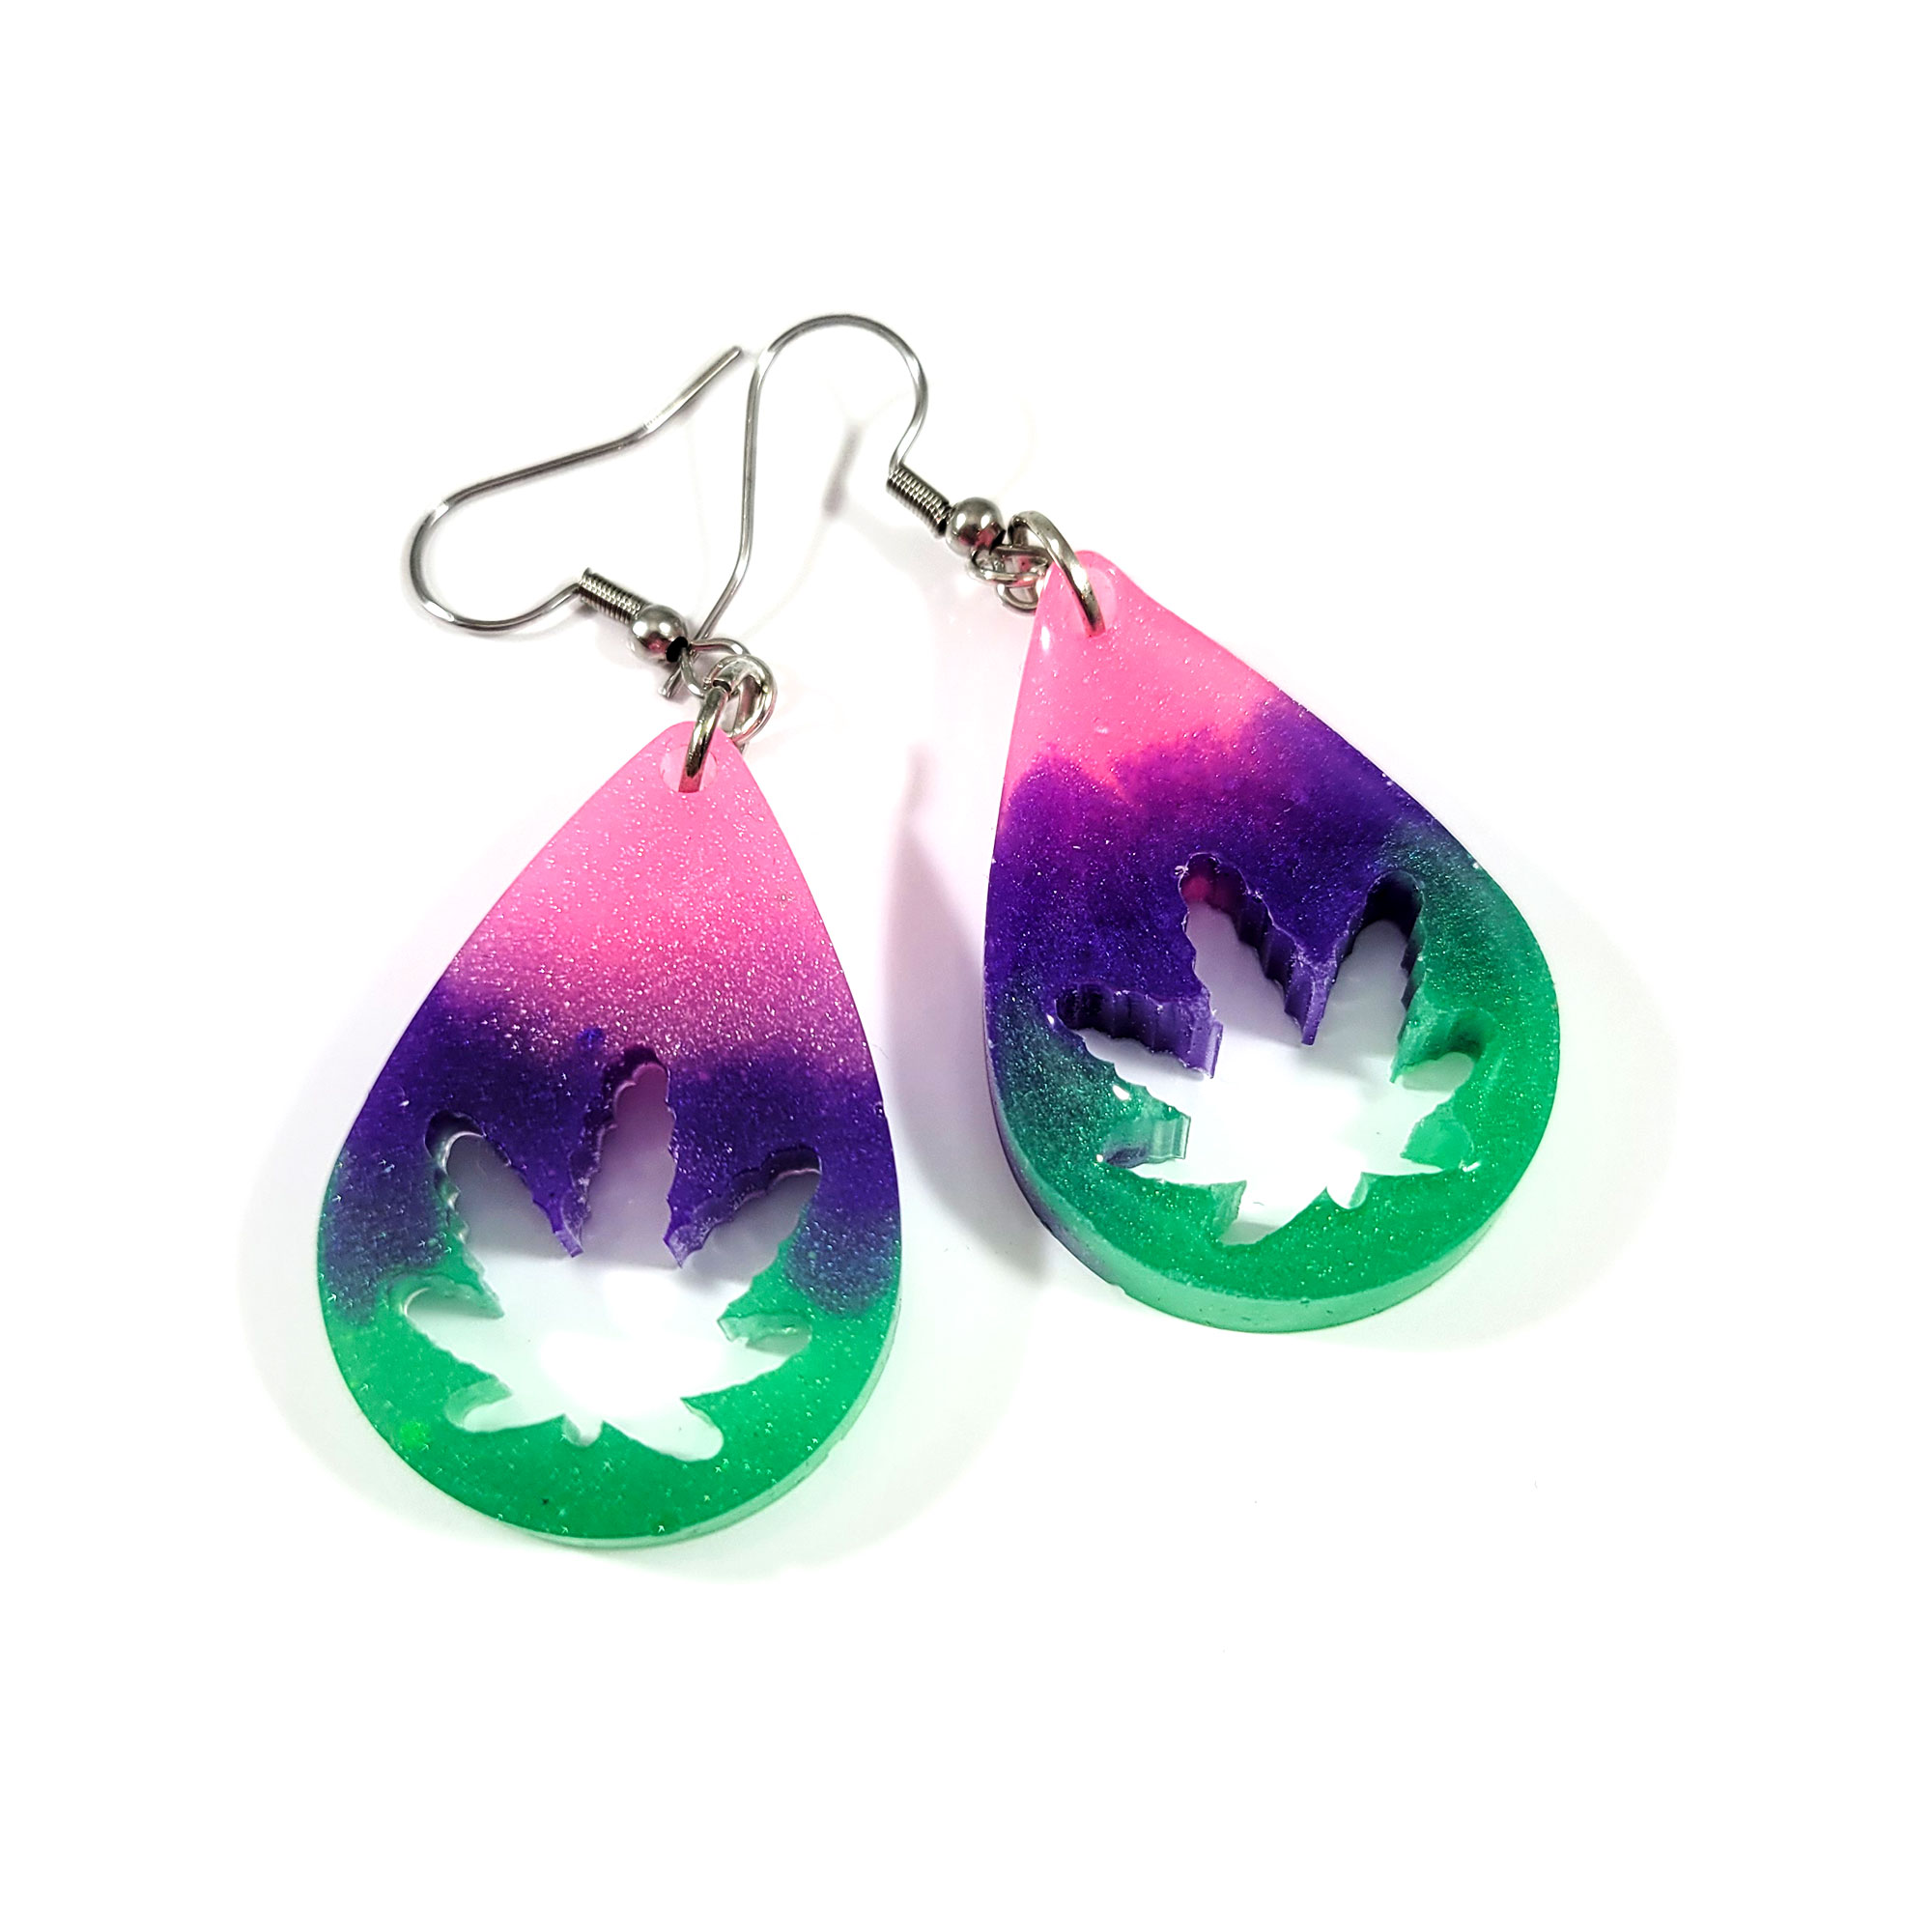 Psychadelic Leaf Earrings by Wilde Designs